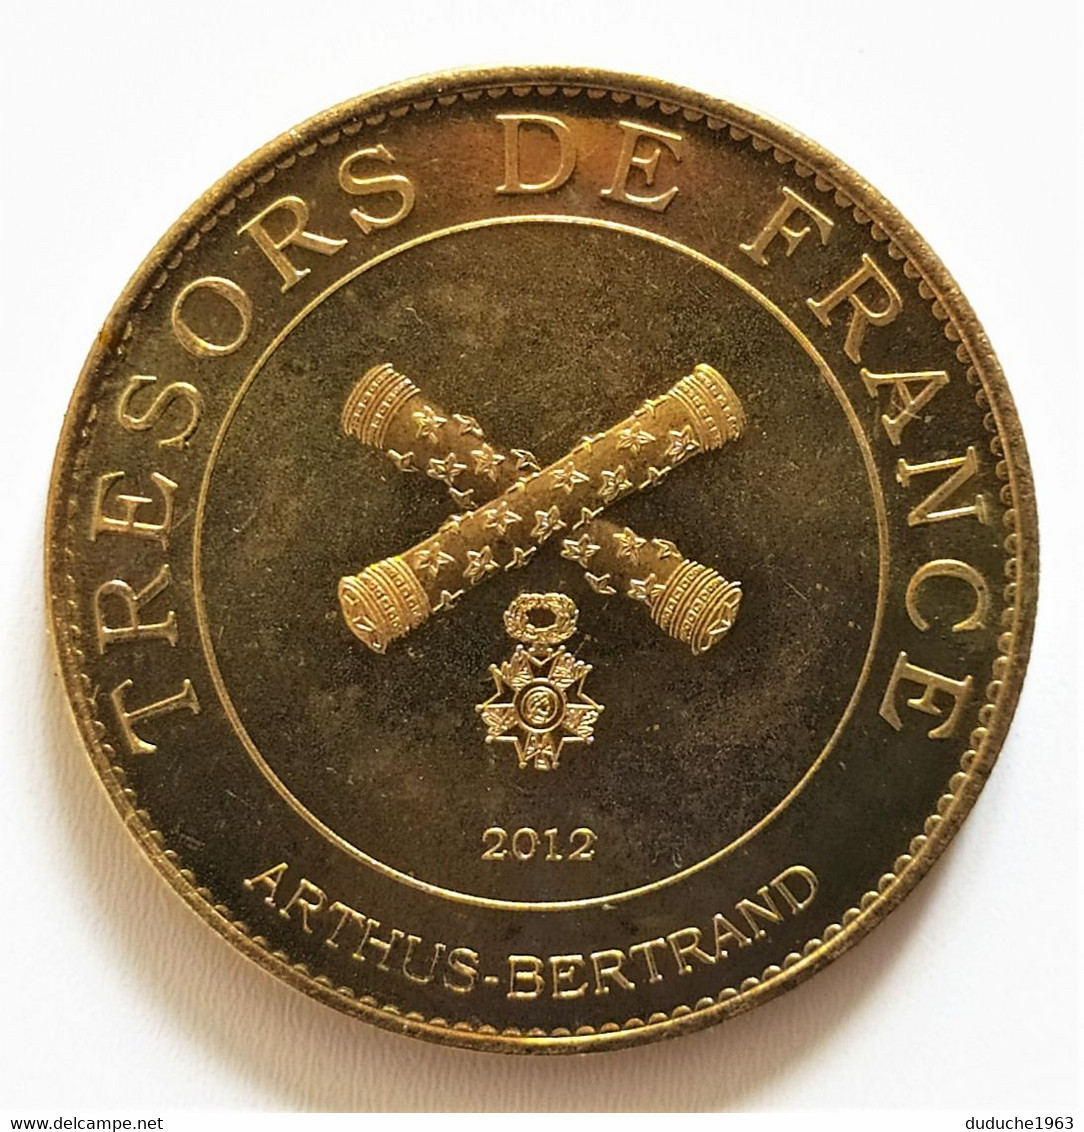 Médaille Arthus Bertrand. 4. Johnny Hallyday Bercy 2012 - 2012